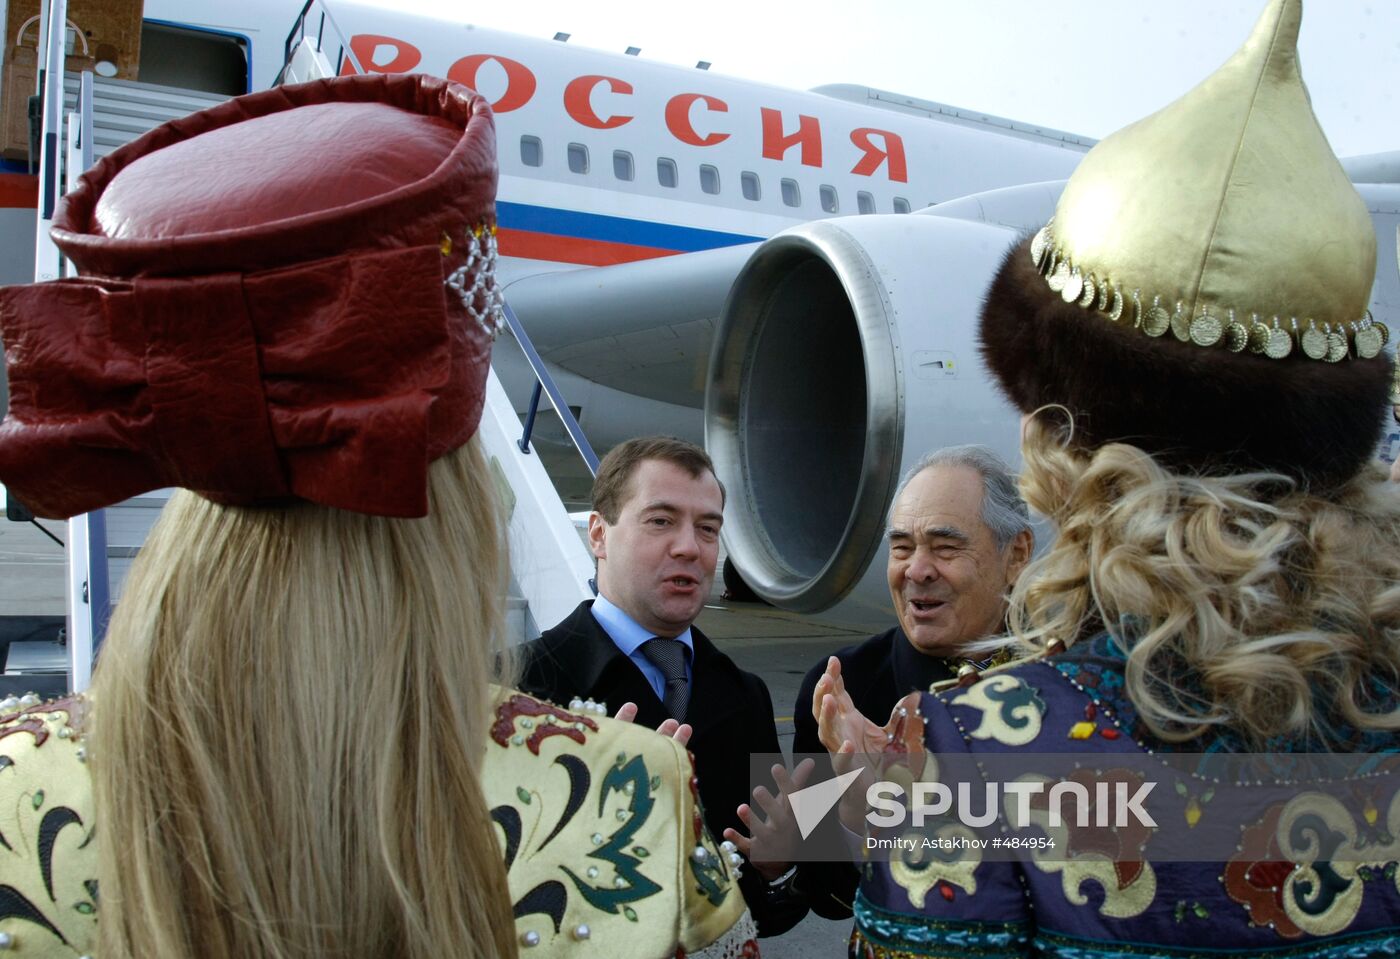 Dmitry Medvedev visits Volga Federal District